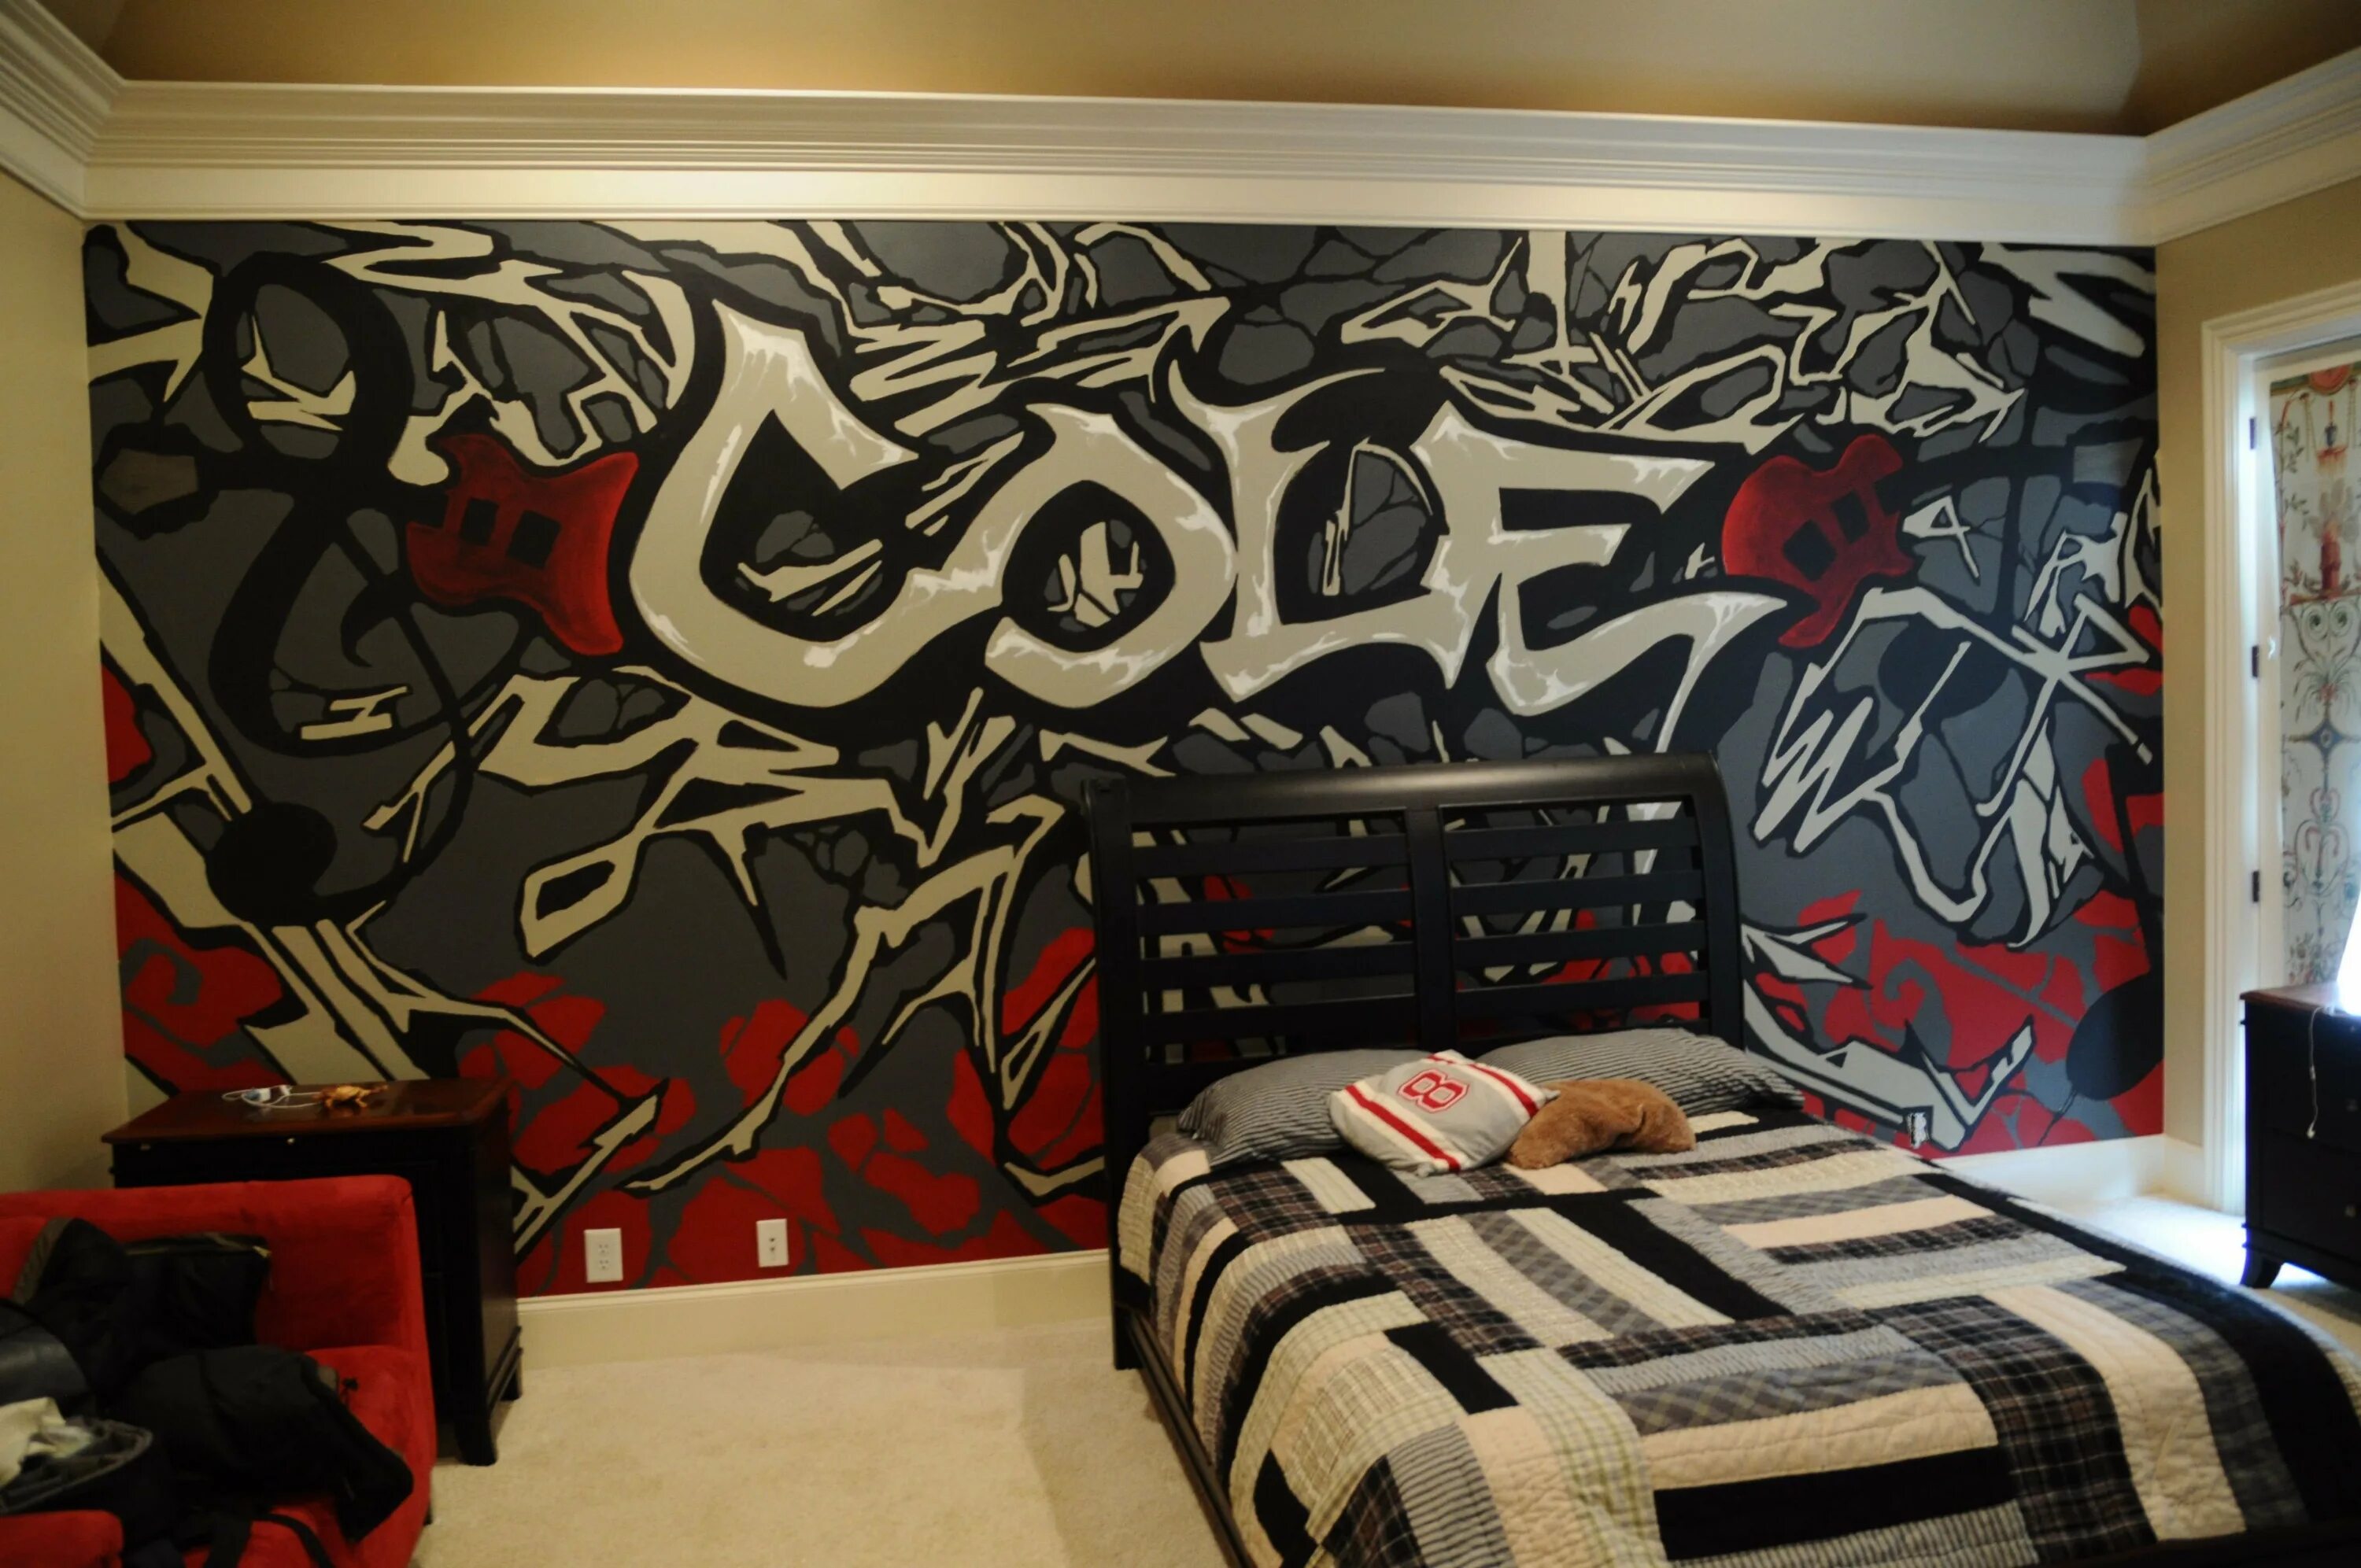 Крутой стен. Граффити на стене в комнате. Граффити на стене в комнате подростка. Комната подростка в стиле граффити. Крутые рисунки на стену в комнату.